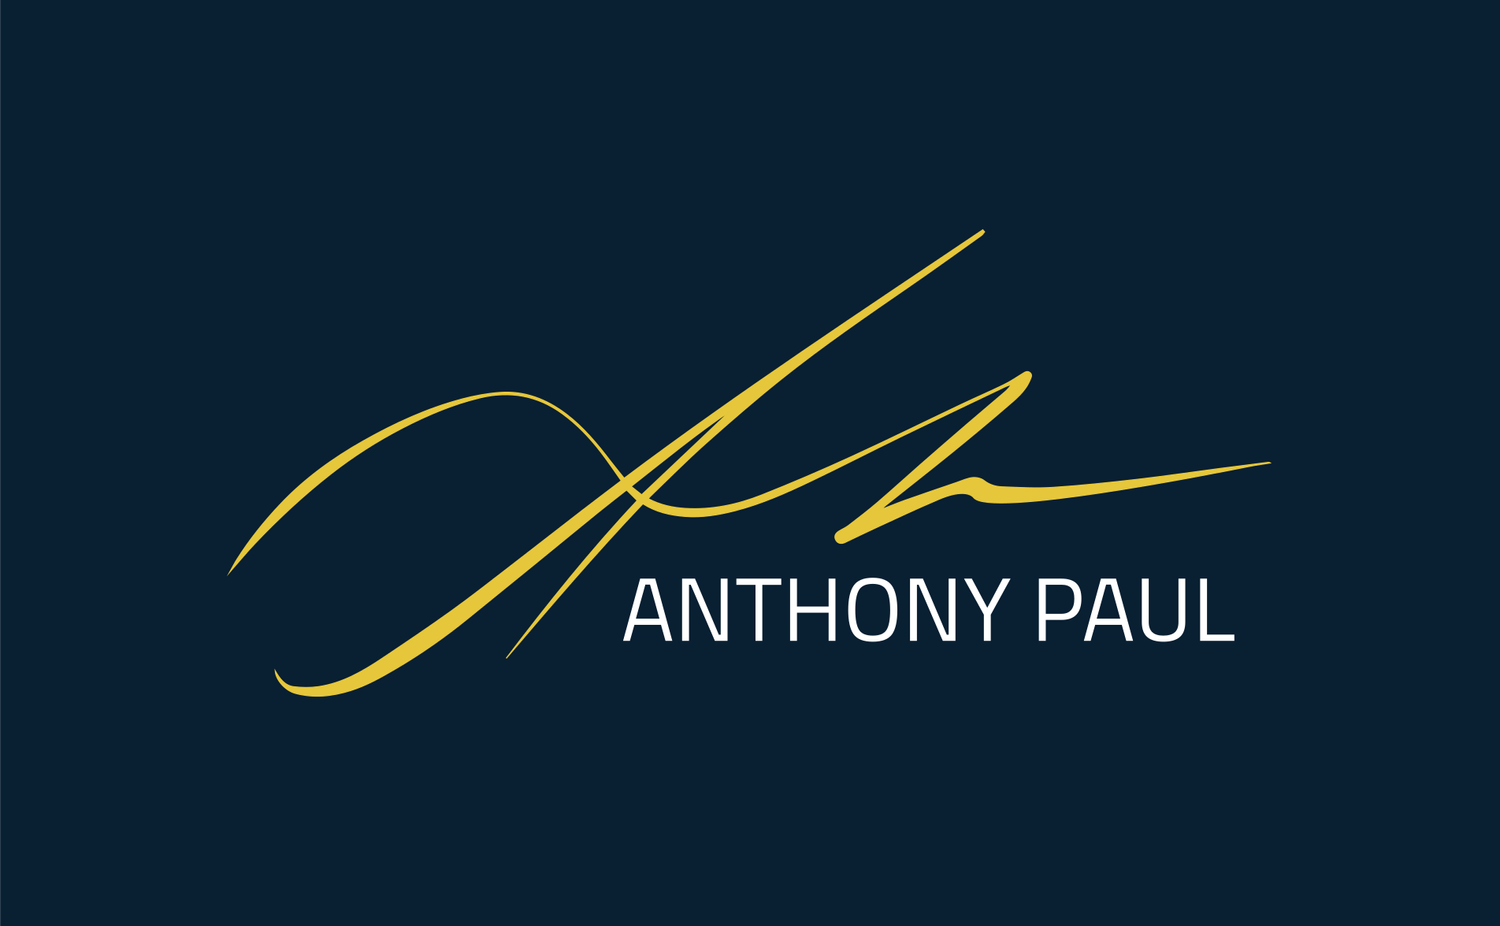 ANTHONY PAUL